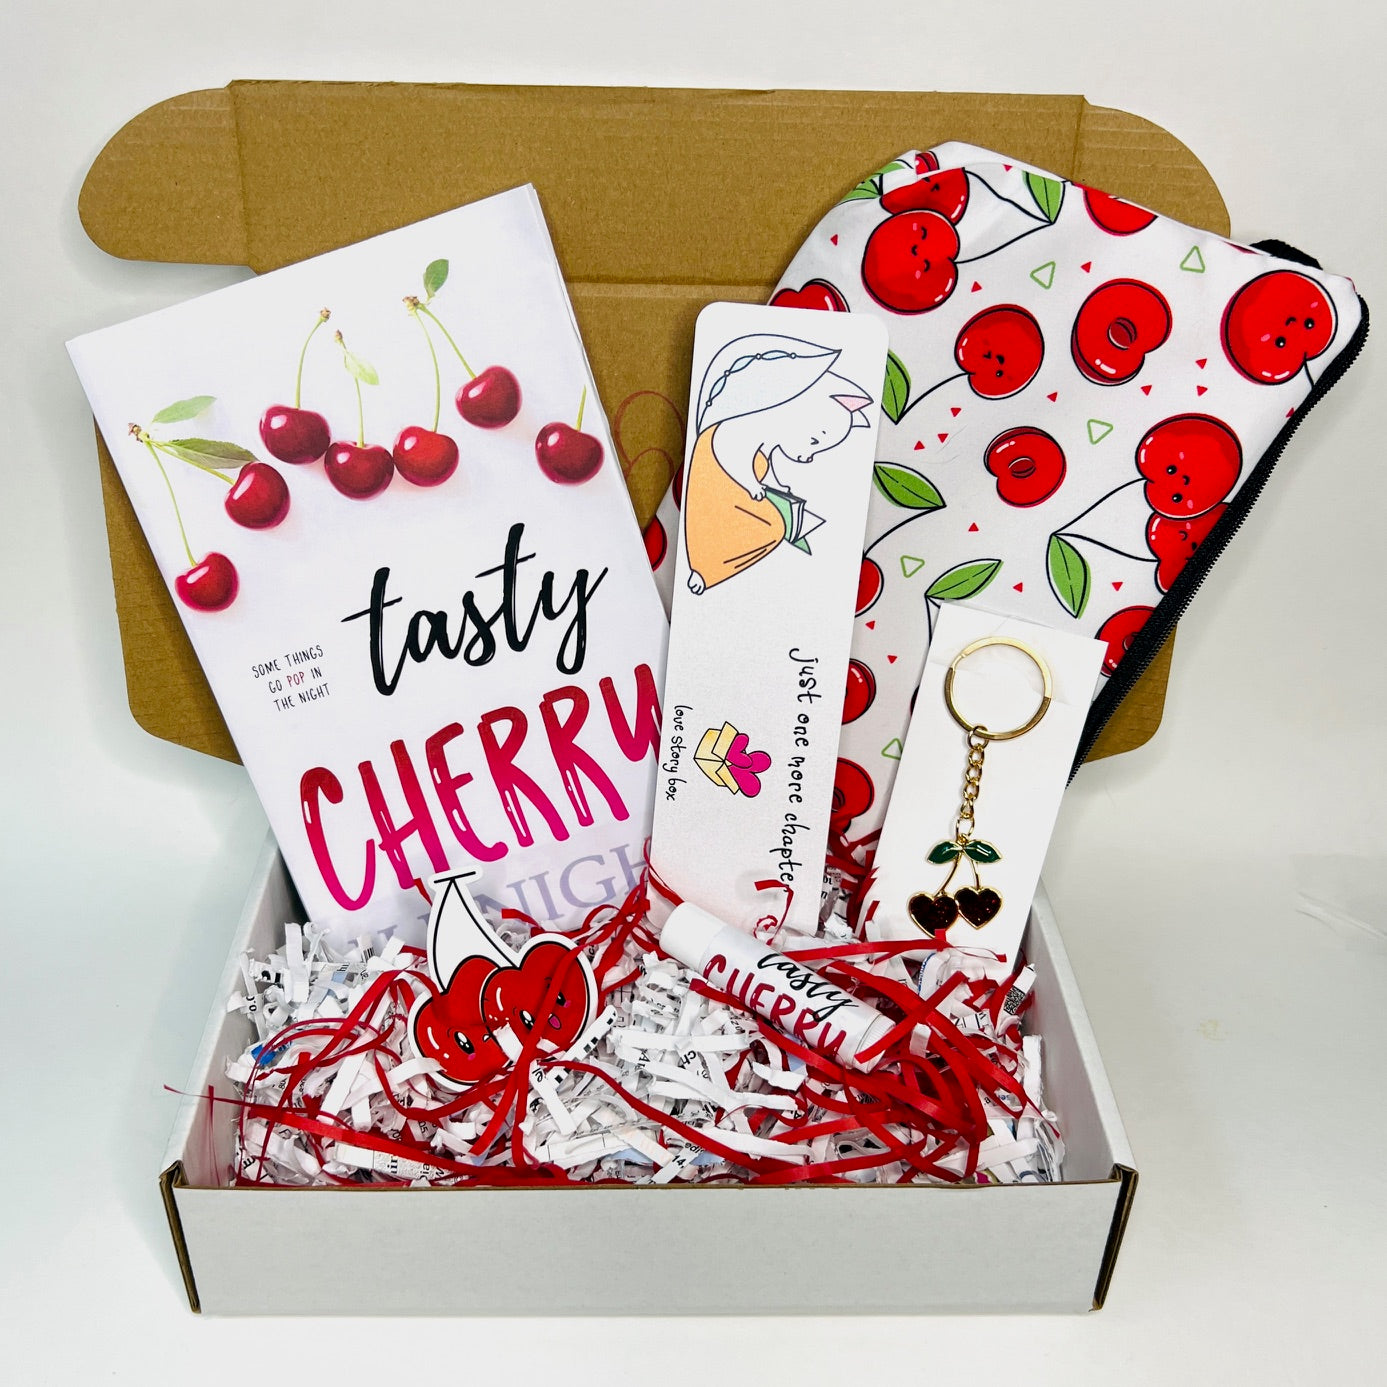 Tasty Cherry book box